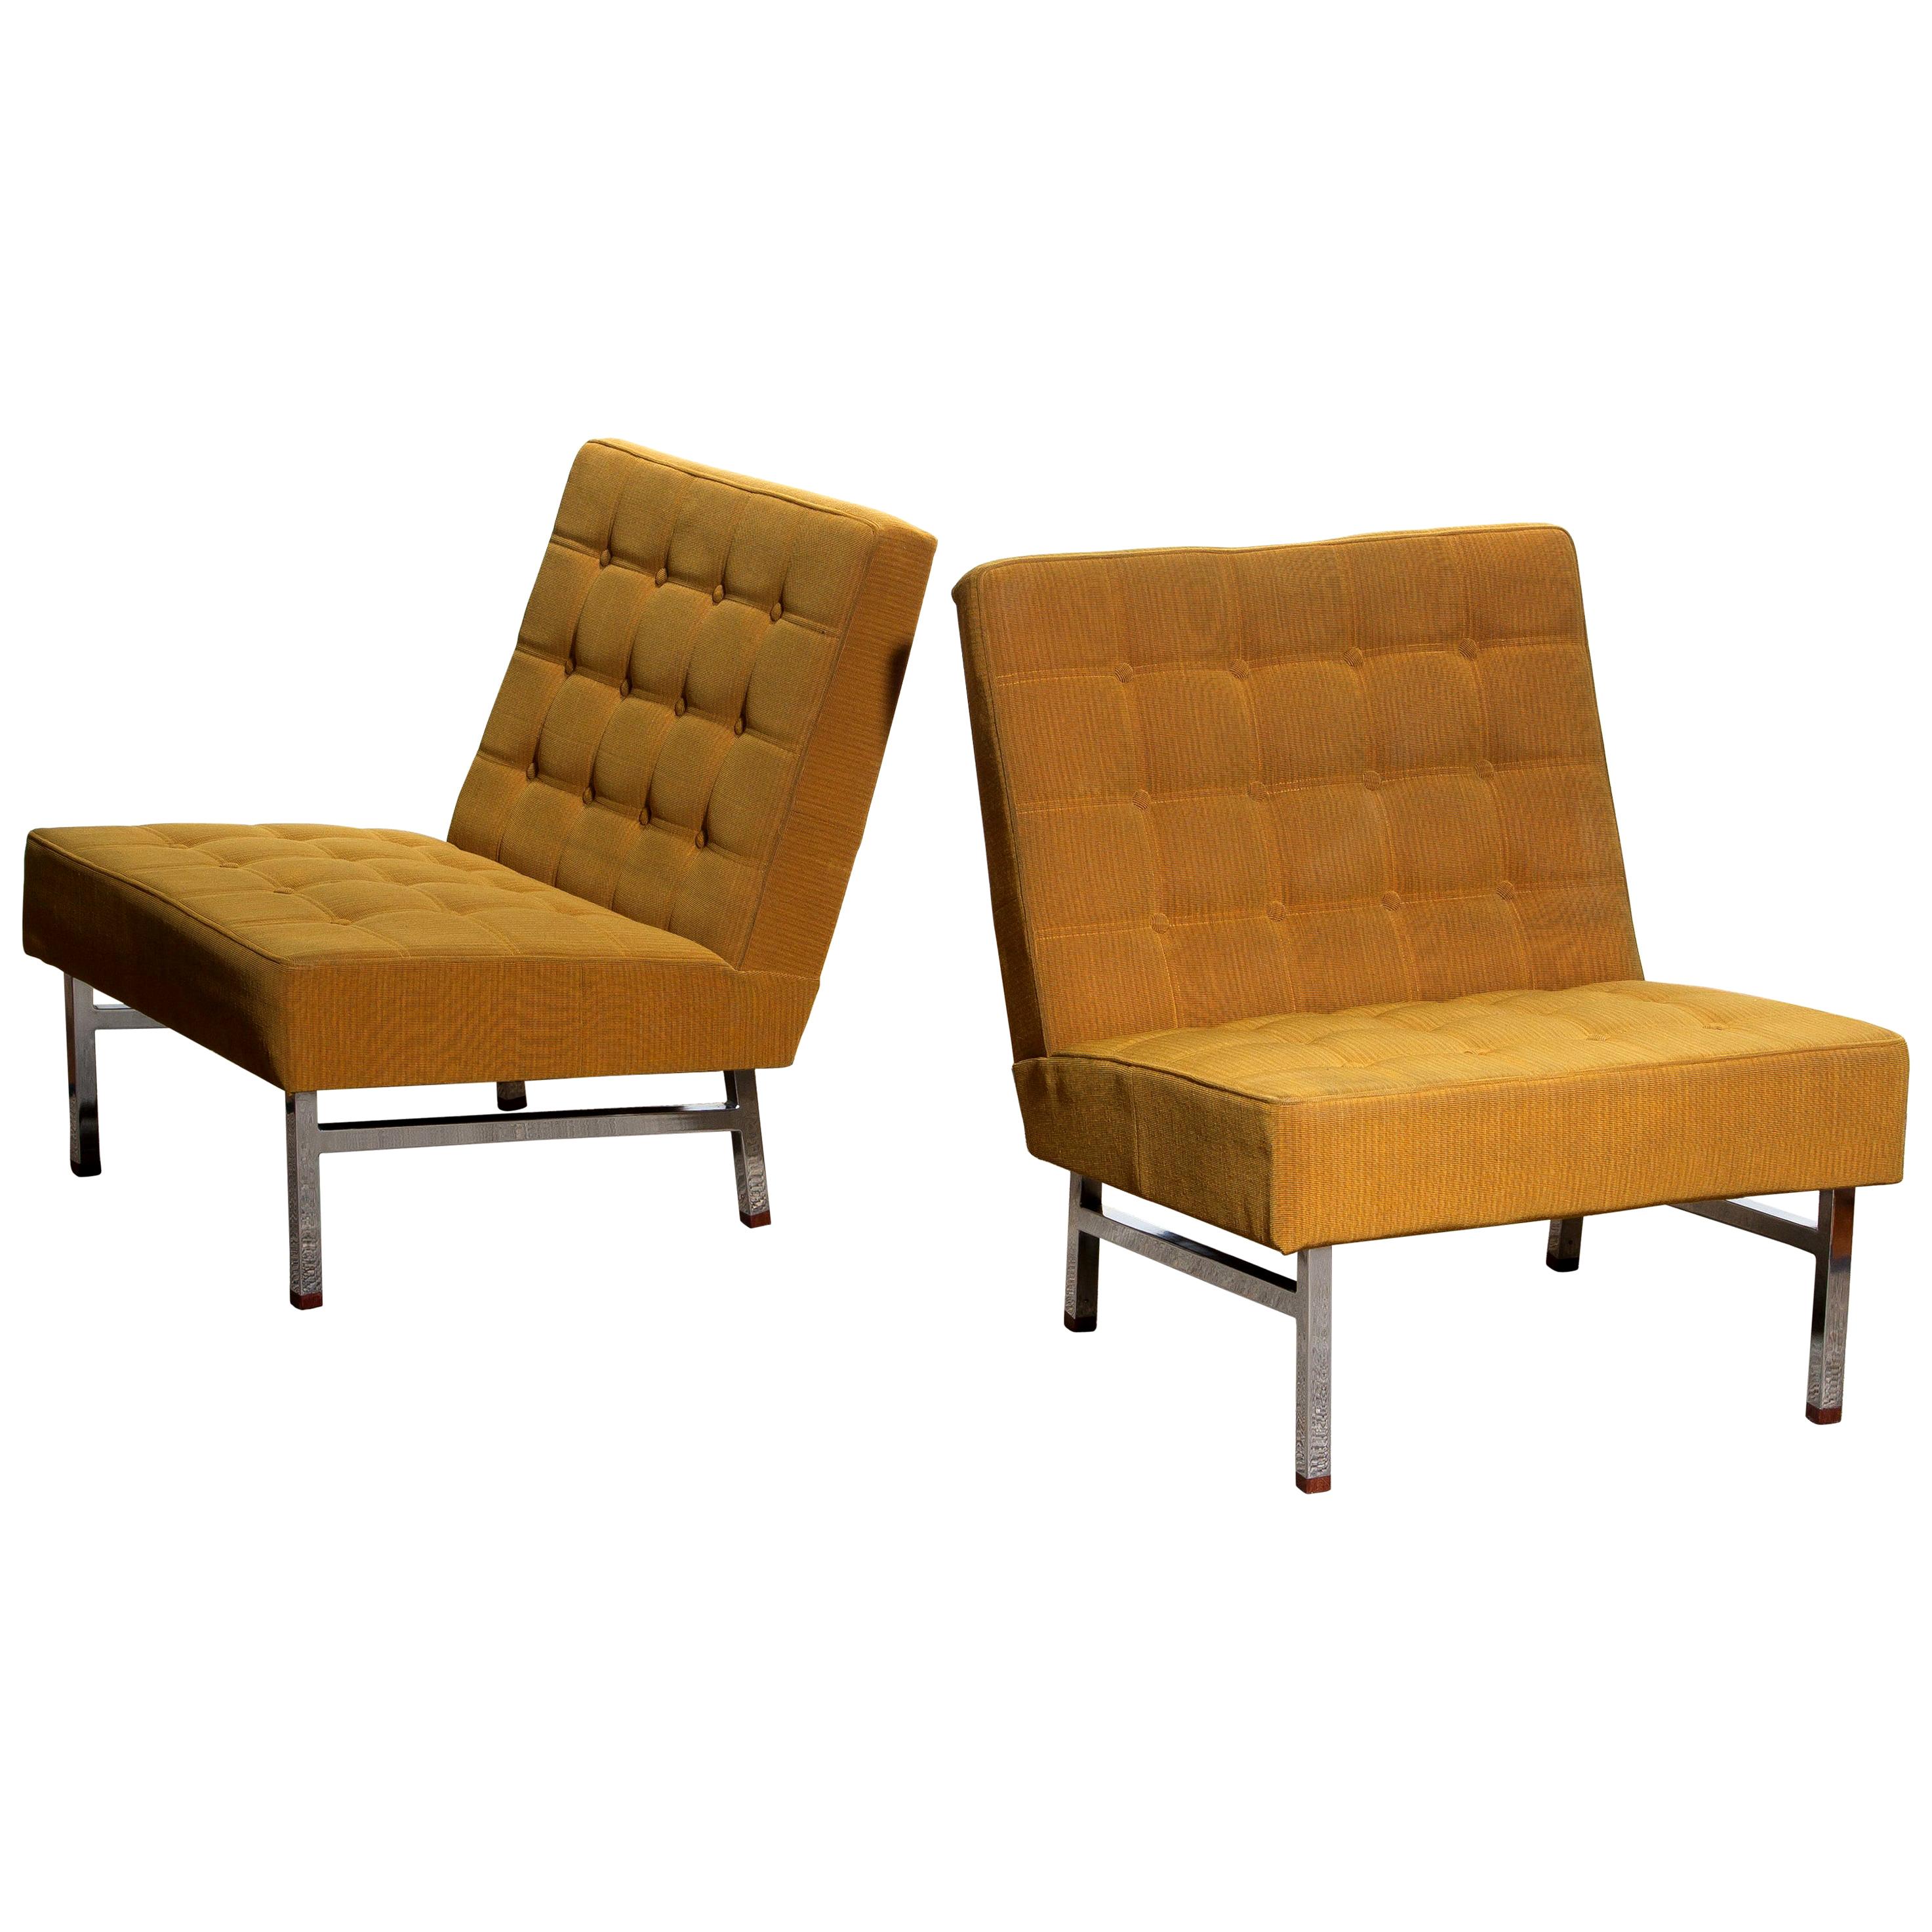 1960s Pair of Lounge or Easy Chairs by Karl Erik Ekselius for JOC Möbler, Sweden 1